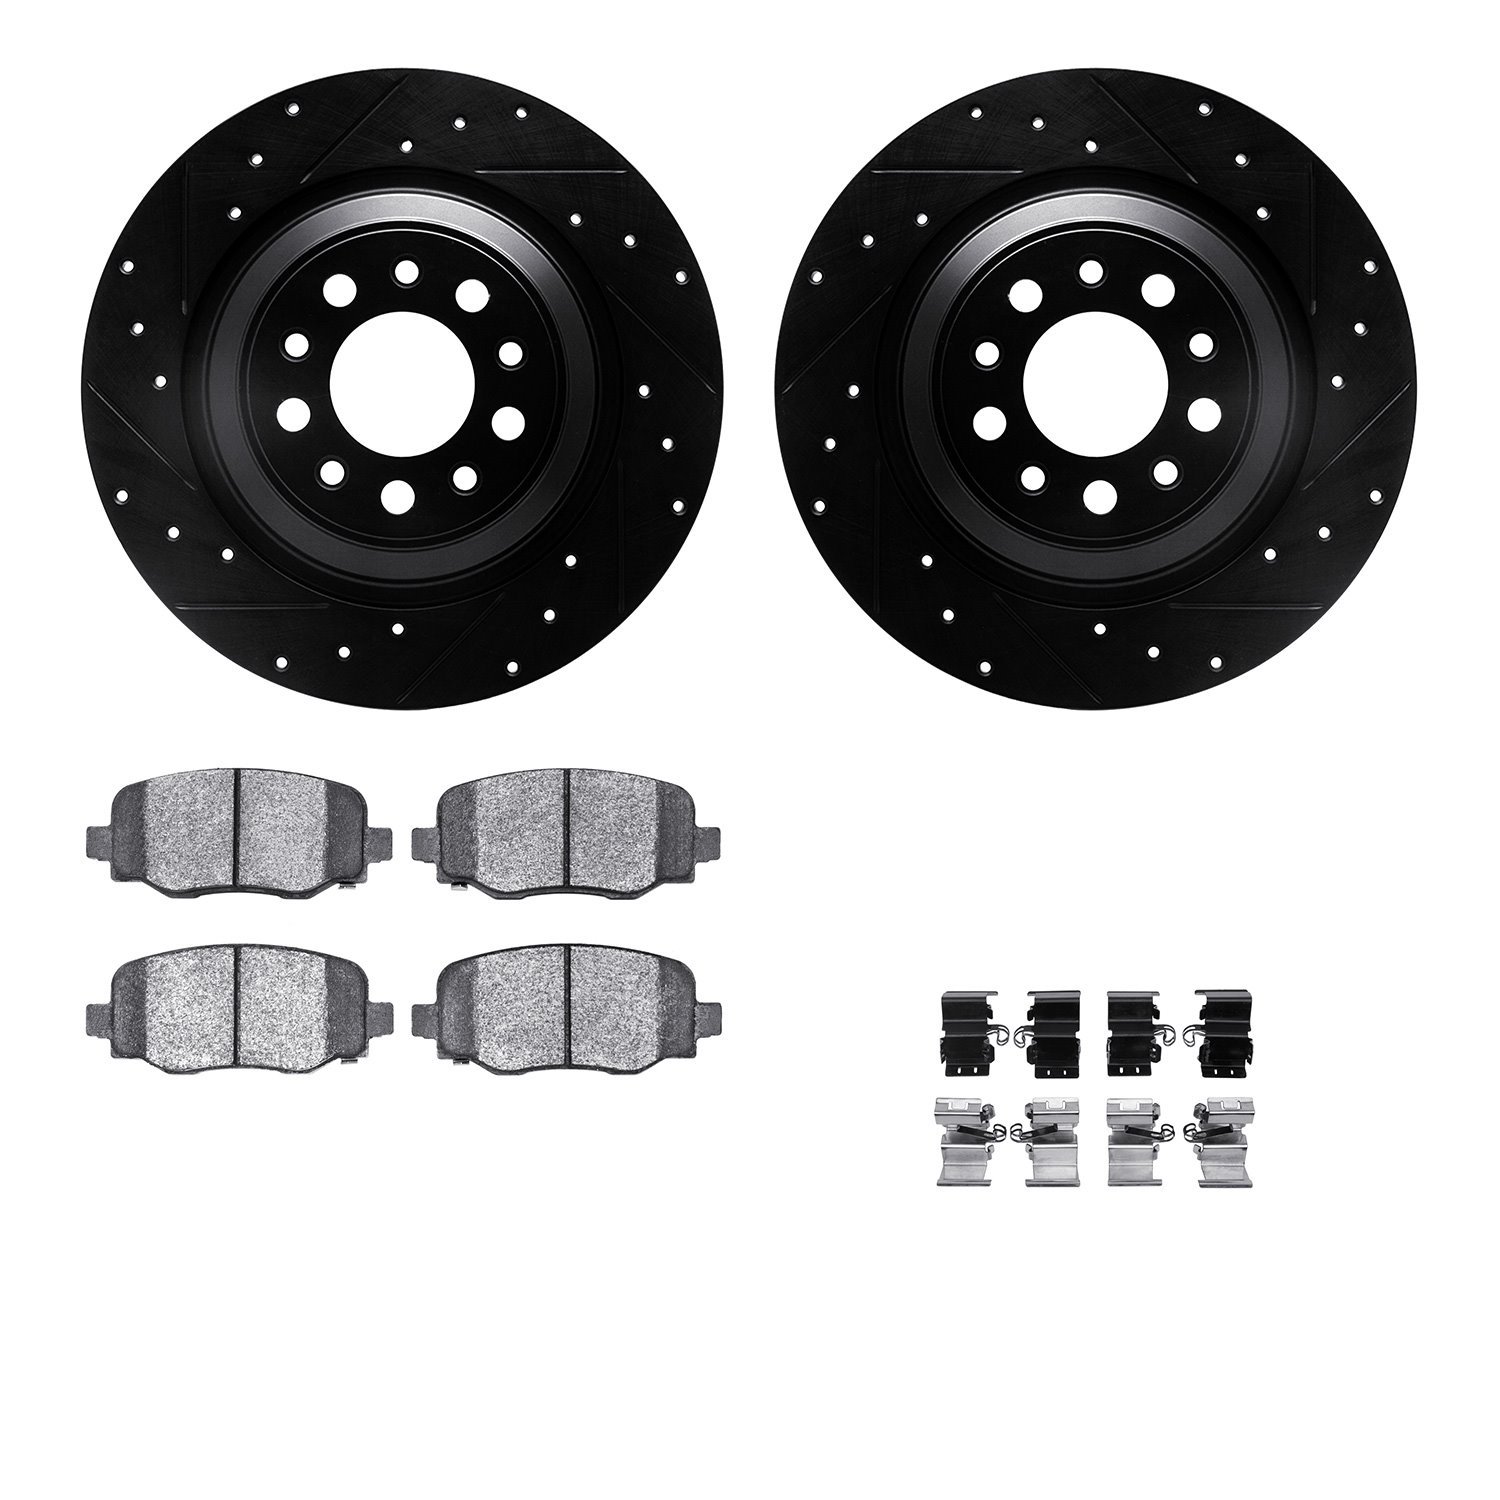 8412-42012 Drilled/Slotted Brake Rotors with Ultimate-Duty Brake Pads Kit & Hardware [Black], Fits Select Mopar, Position: Rear